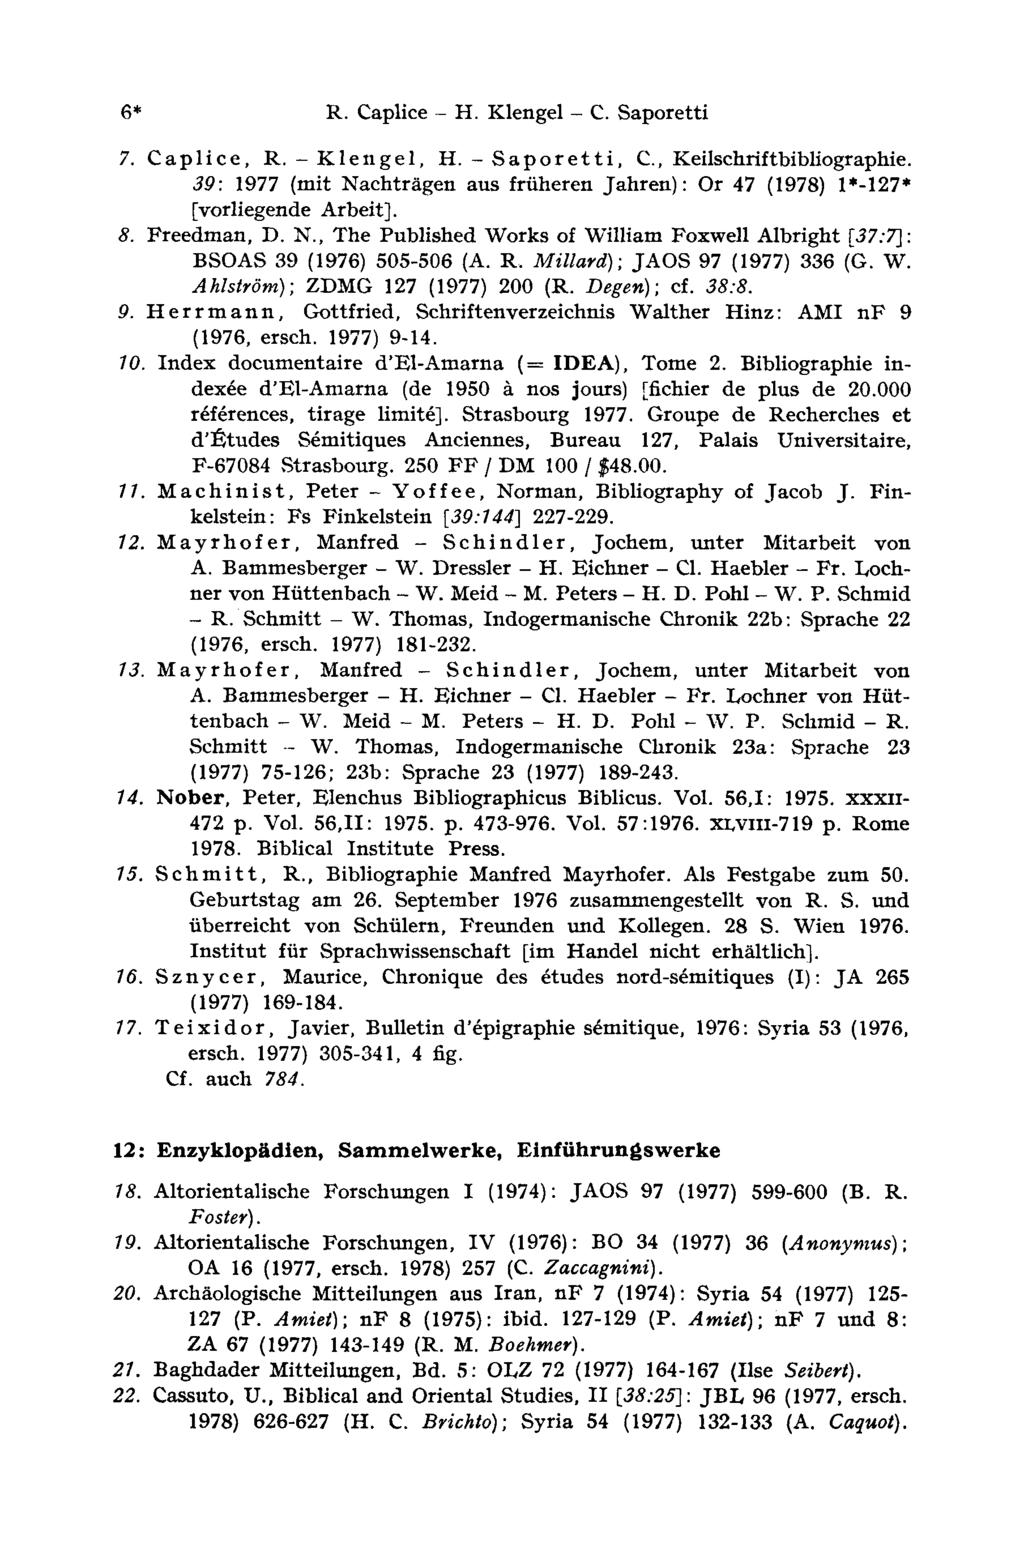 6* R. Caplice - H. Klengel - С. Saporetti 7. Caplice, R. - Klengel, H. - Saporetti, C., Keilschriftbibliographie.